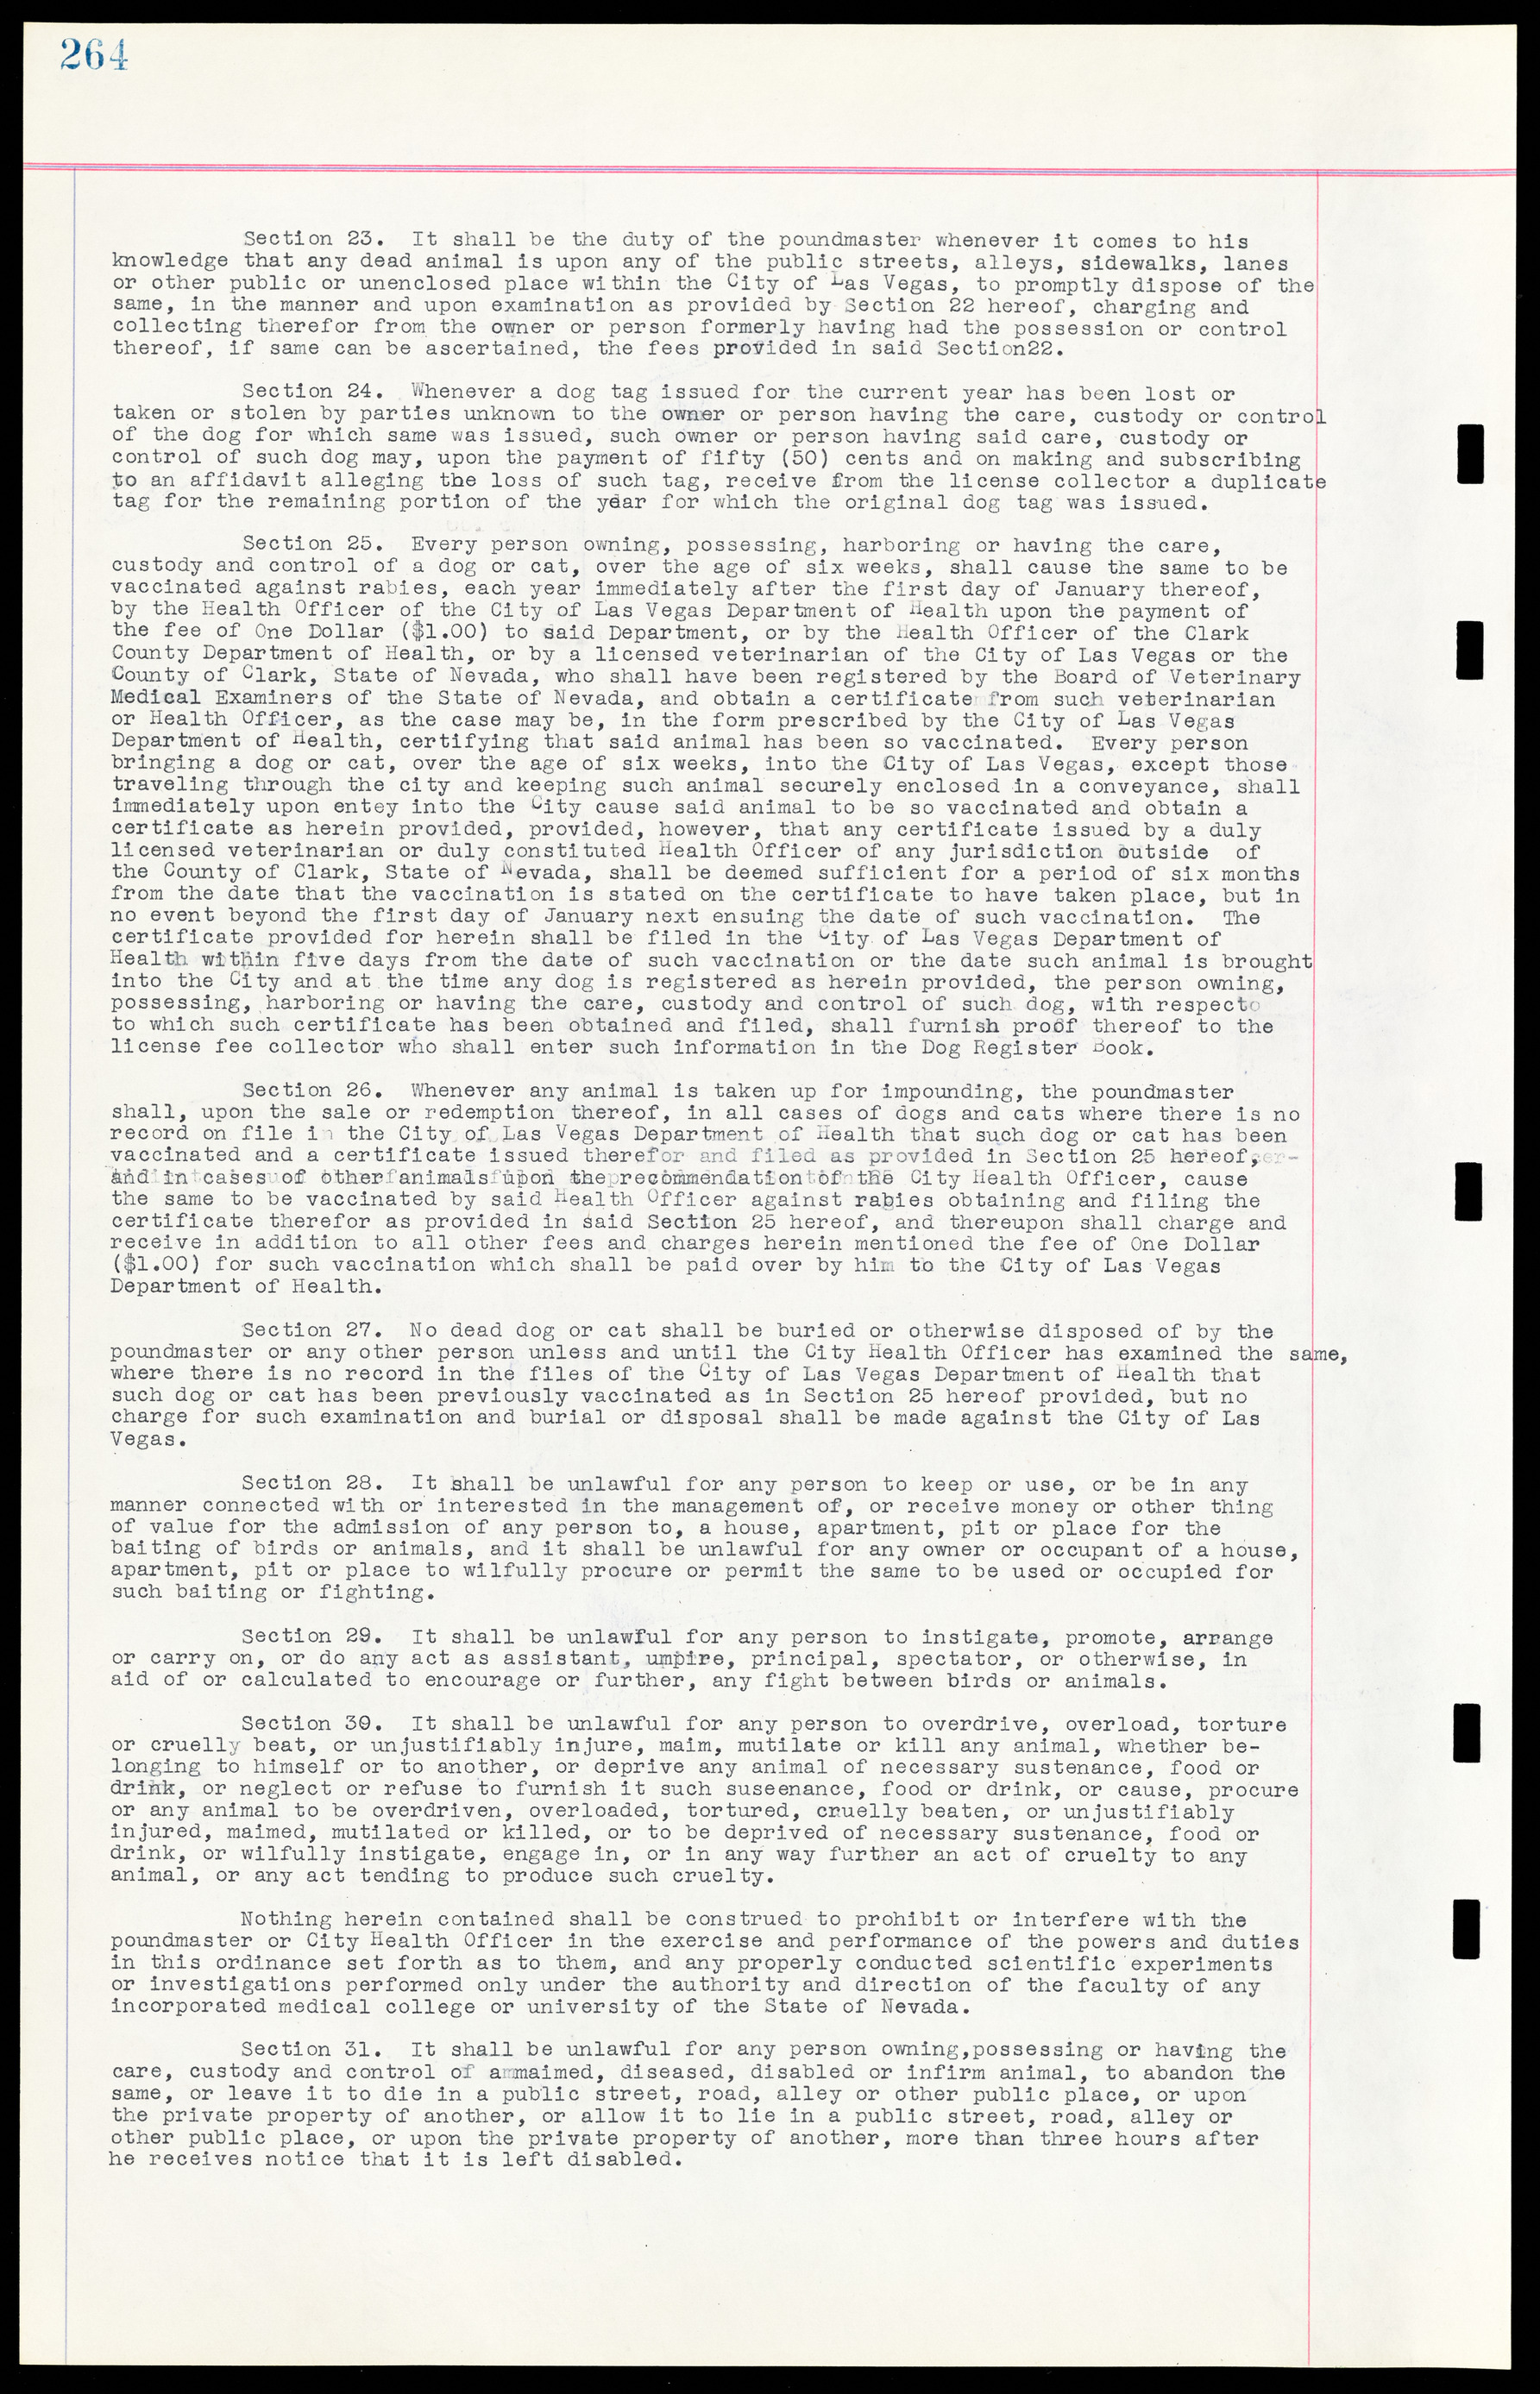 Las Vegas City Ordinances, March 31, 1933 to October 25, 1950, lvc000014-293